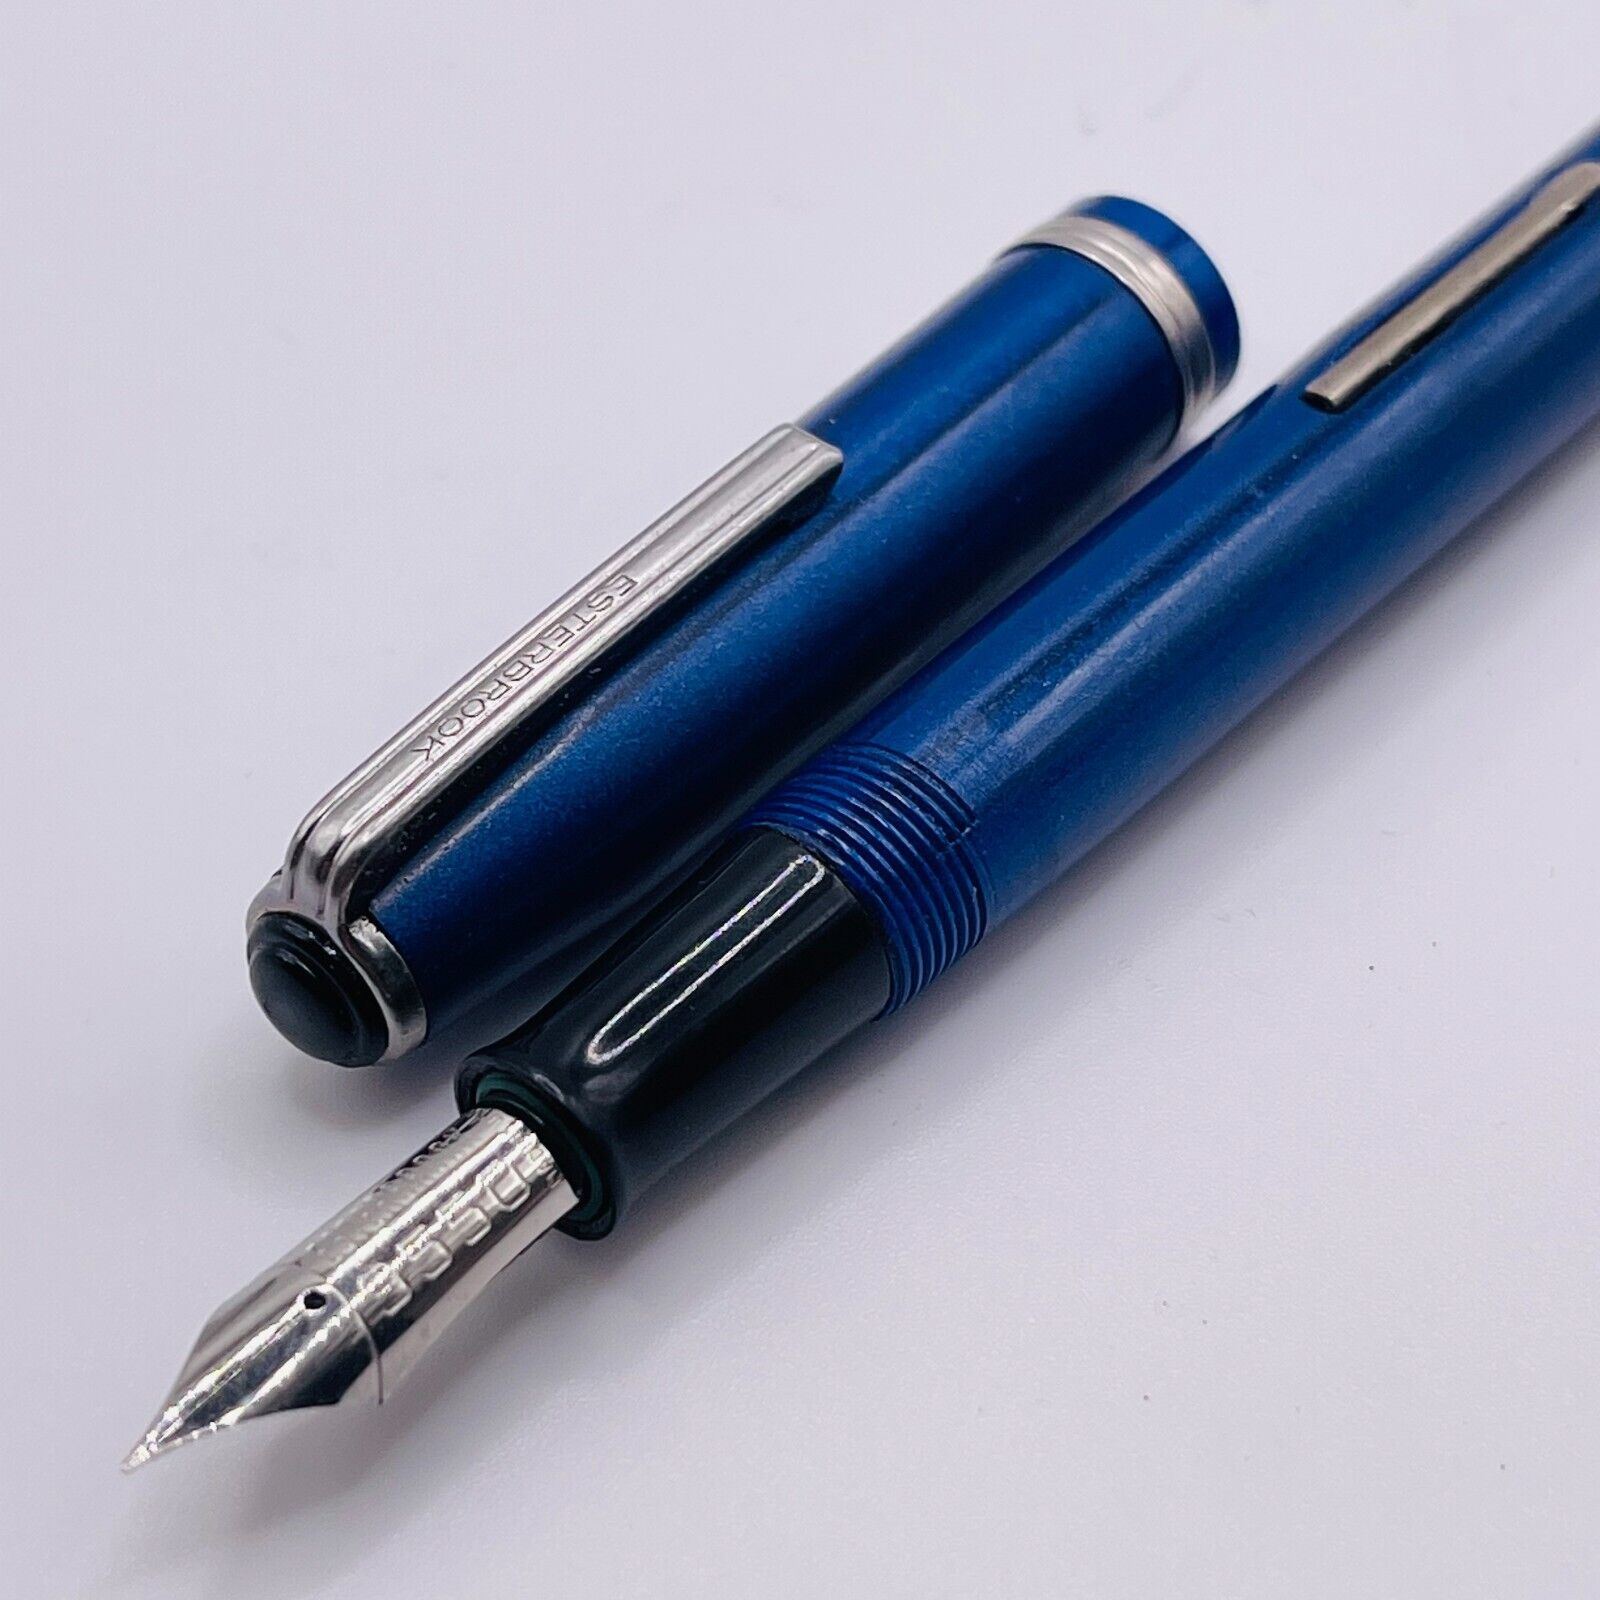 Esterbrook Fountain Pen Icicle Blue 9550 Nib Model LJ